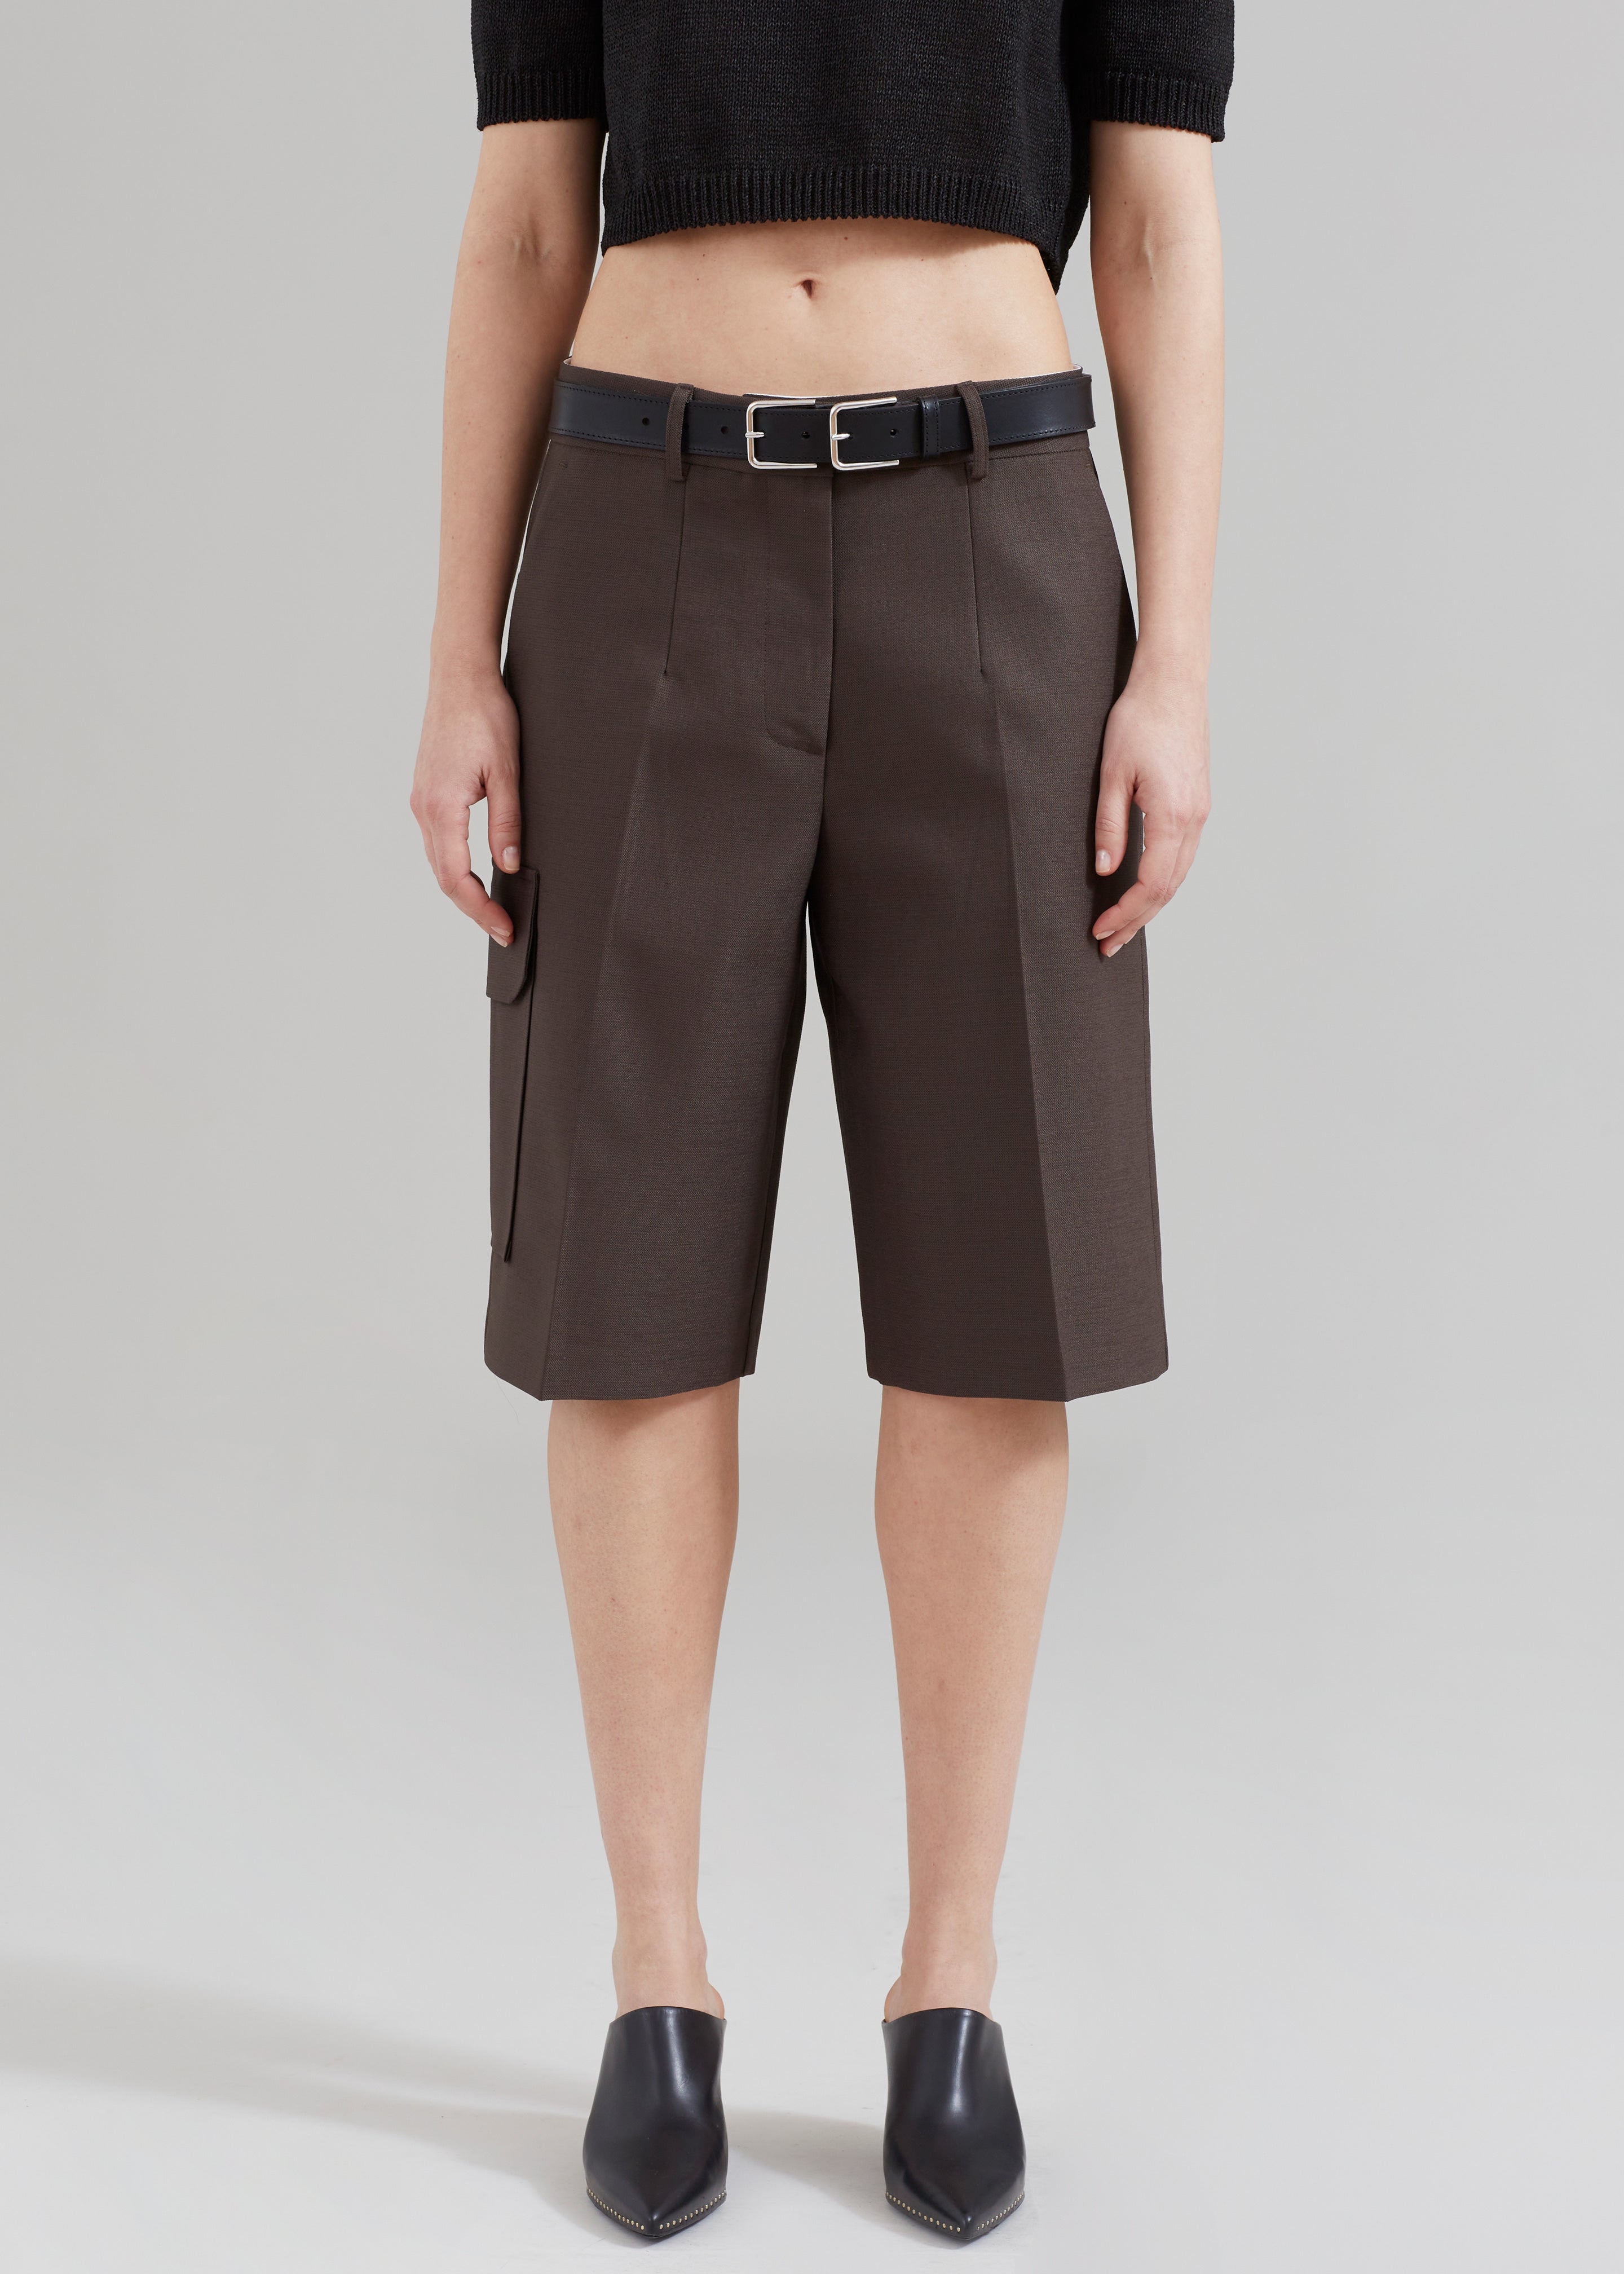 Revel Cargo Shorts - Brown - 5